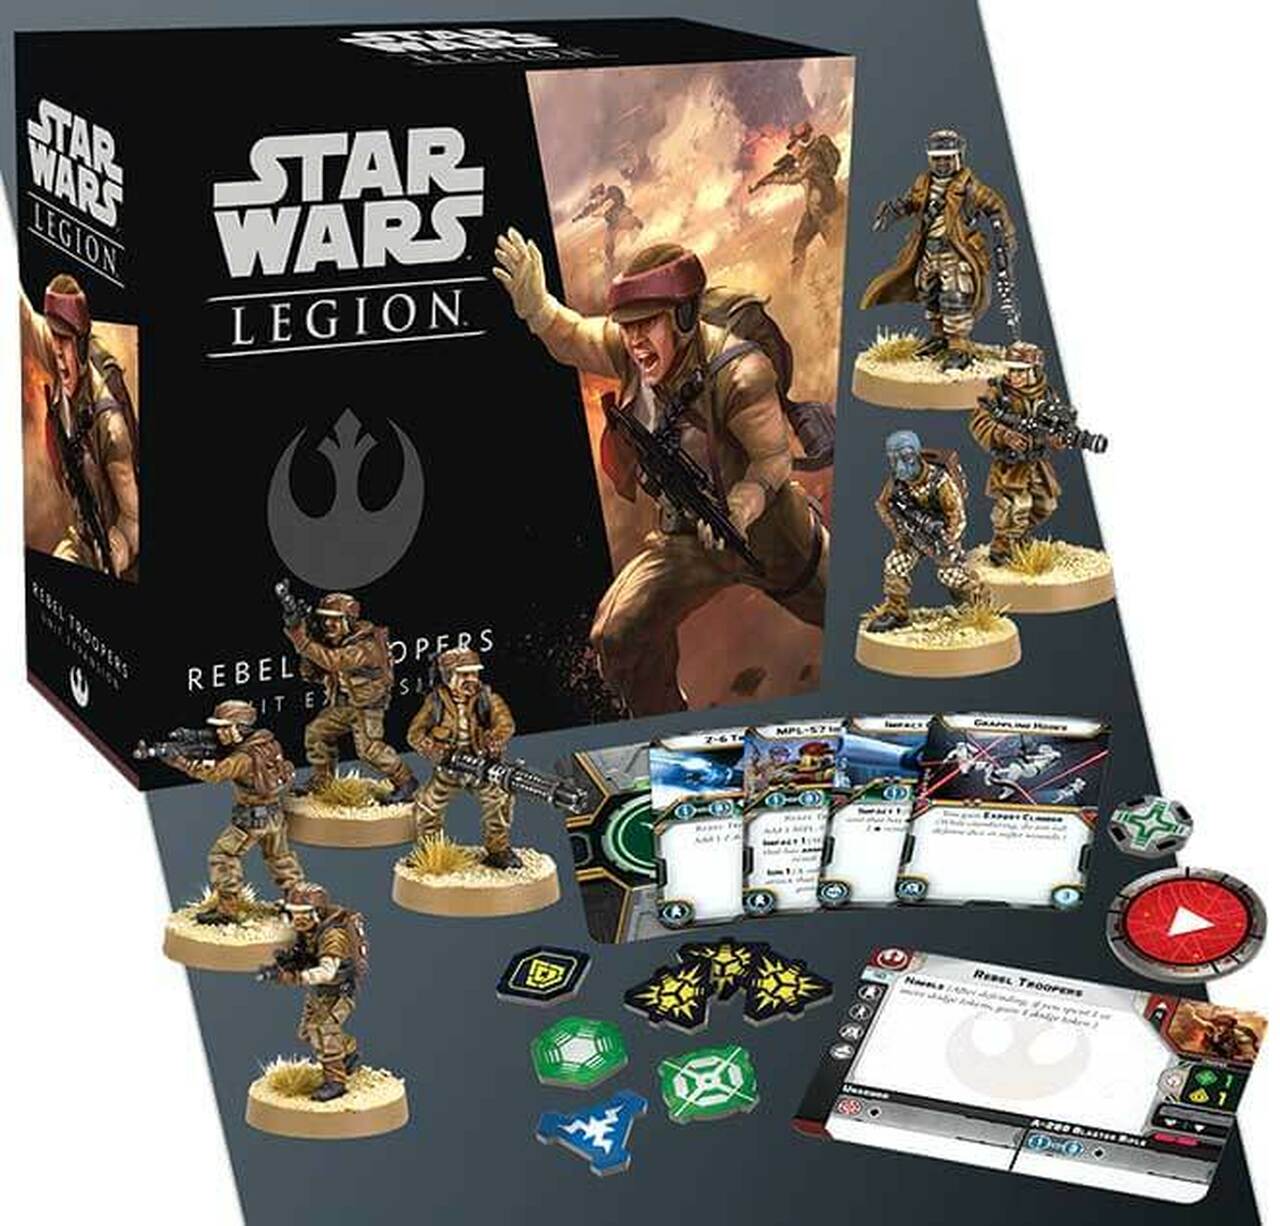 SW Legion: Rebel Troopers